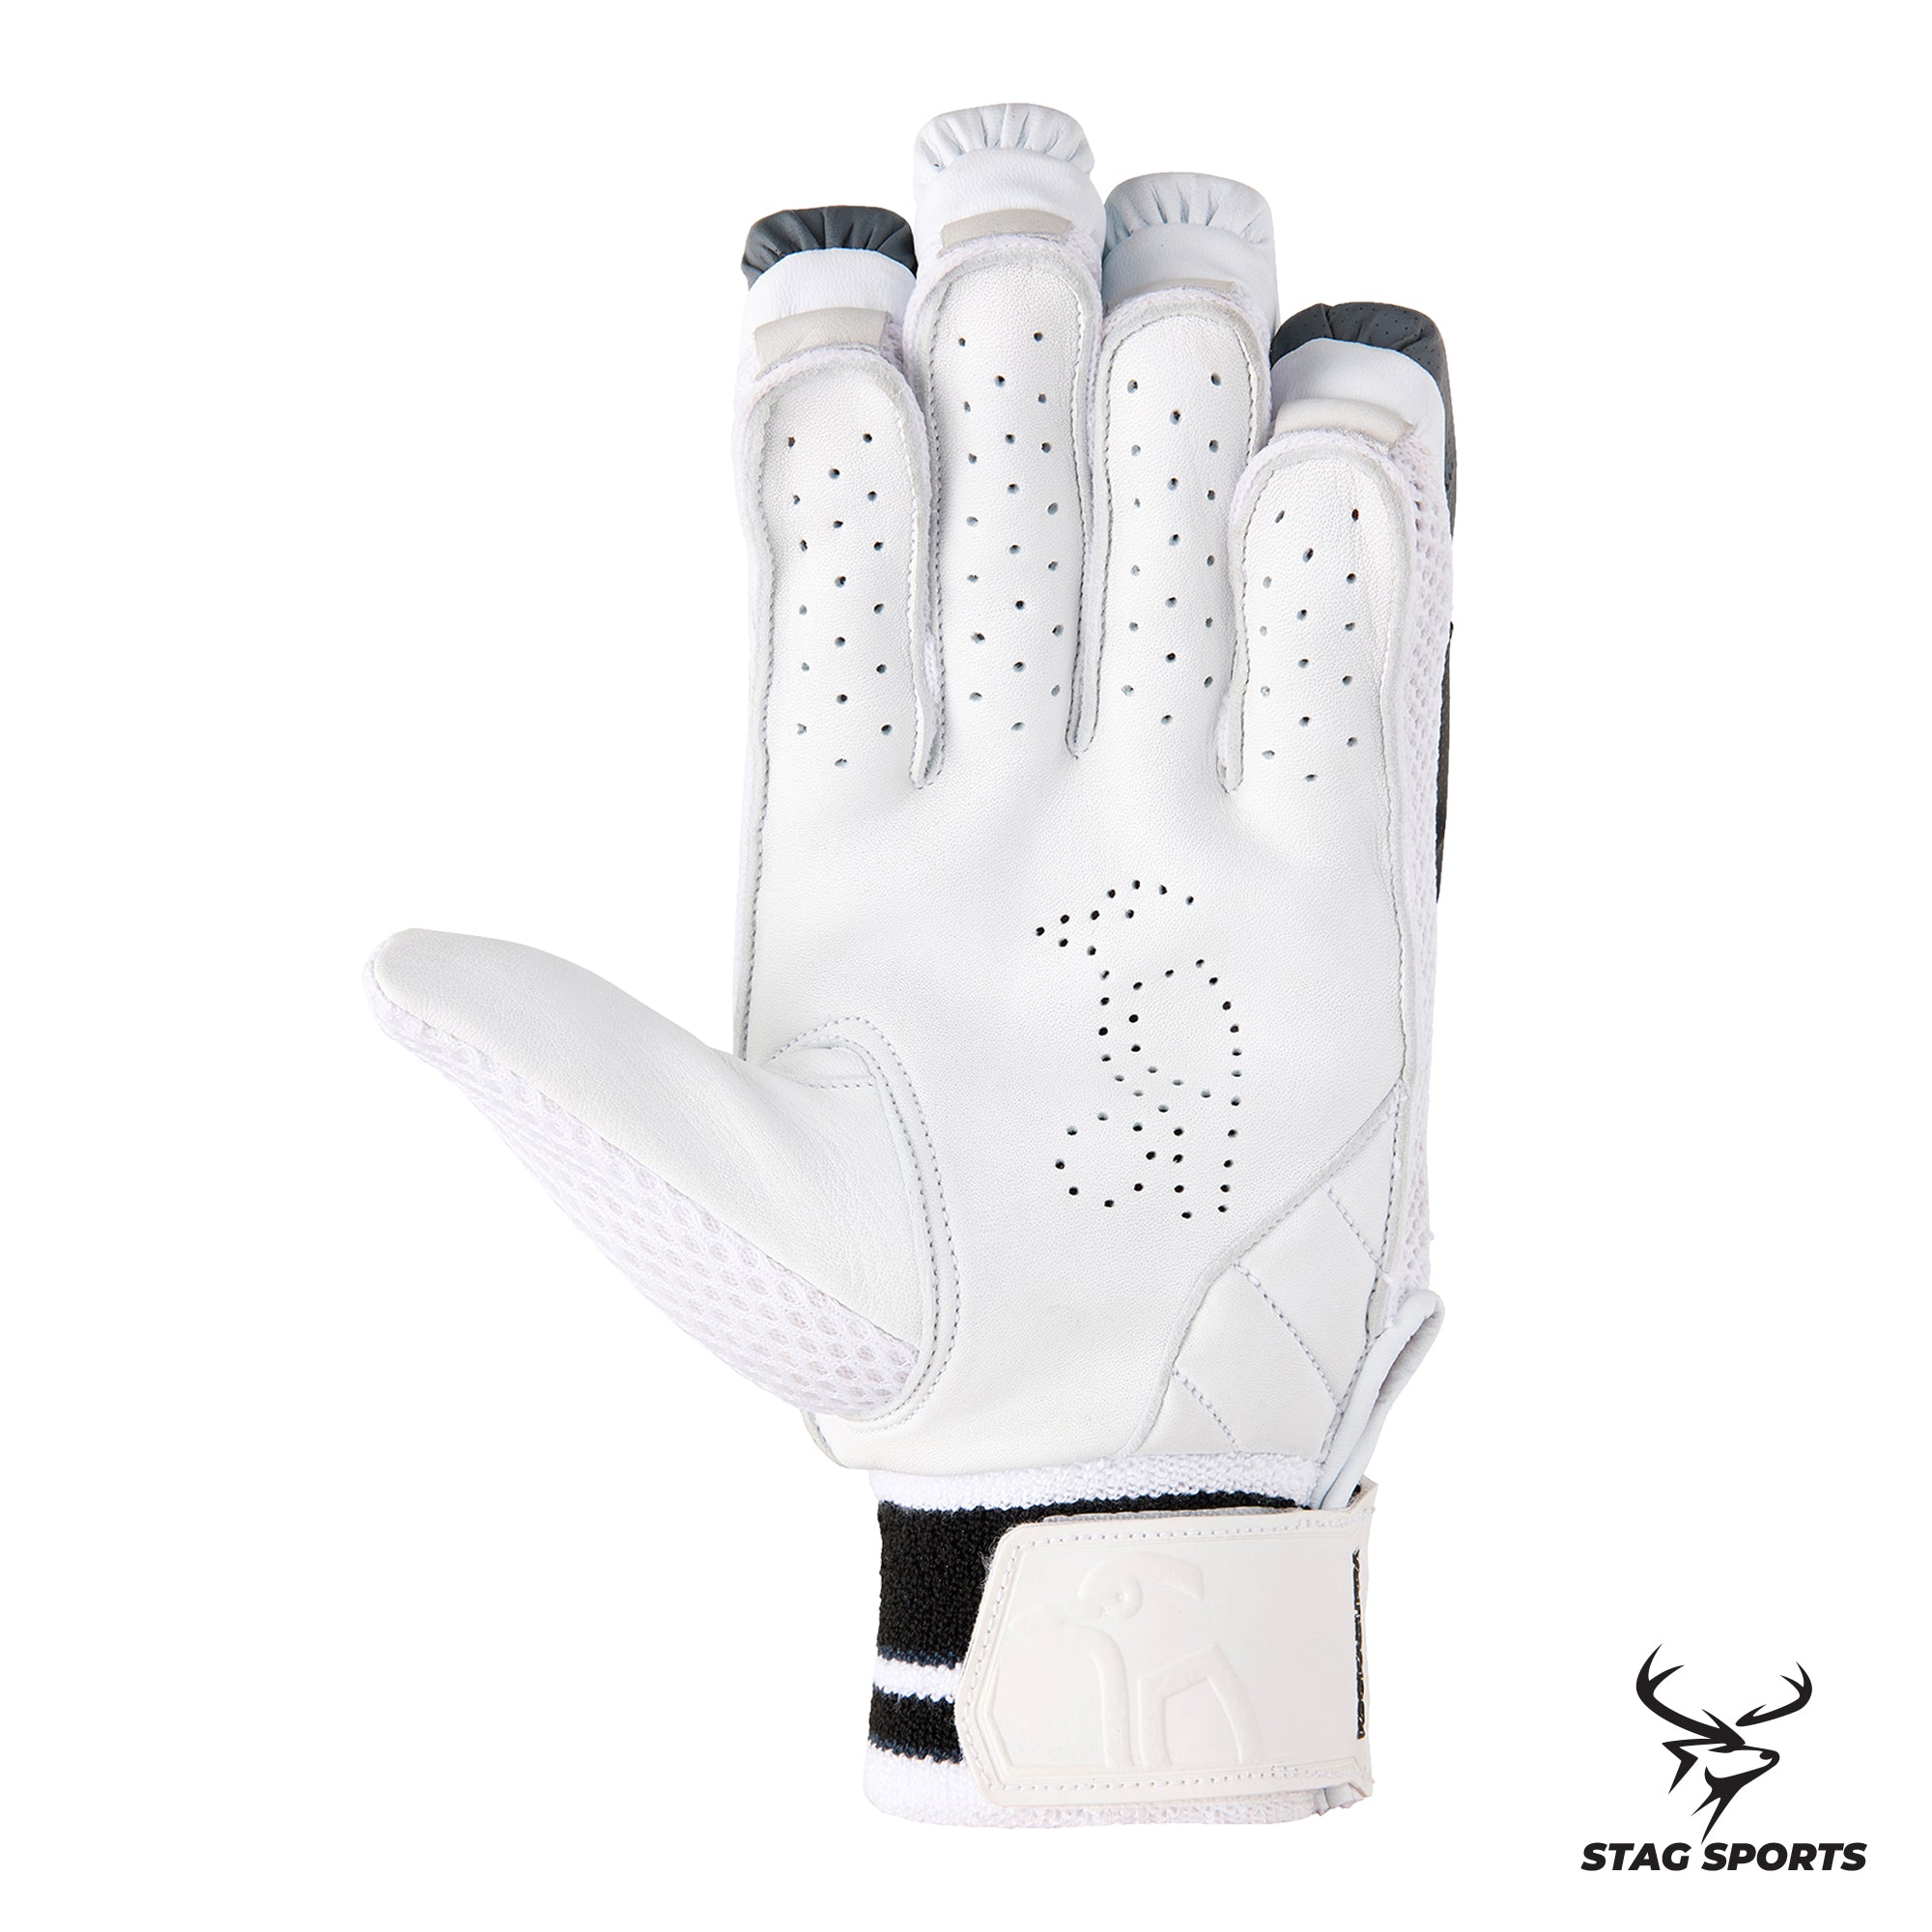 Kookaburra Pro 4.0 Cricket Batting Gloves